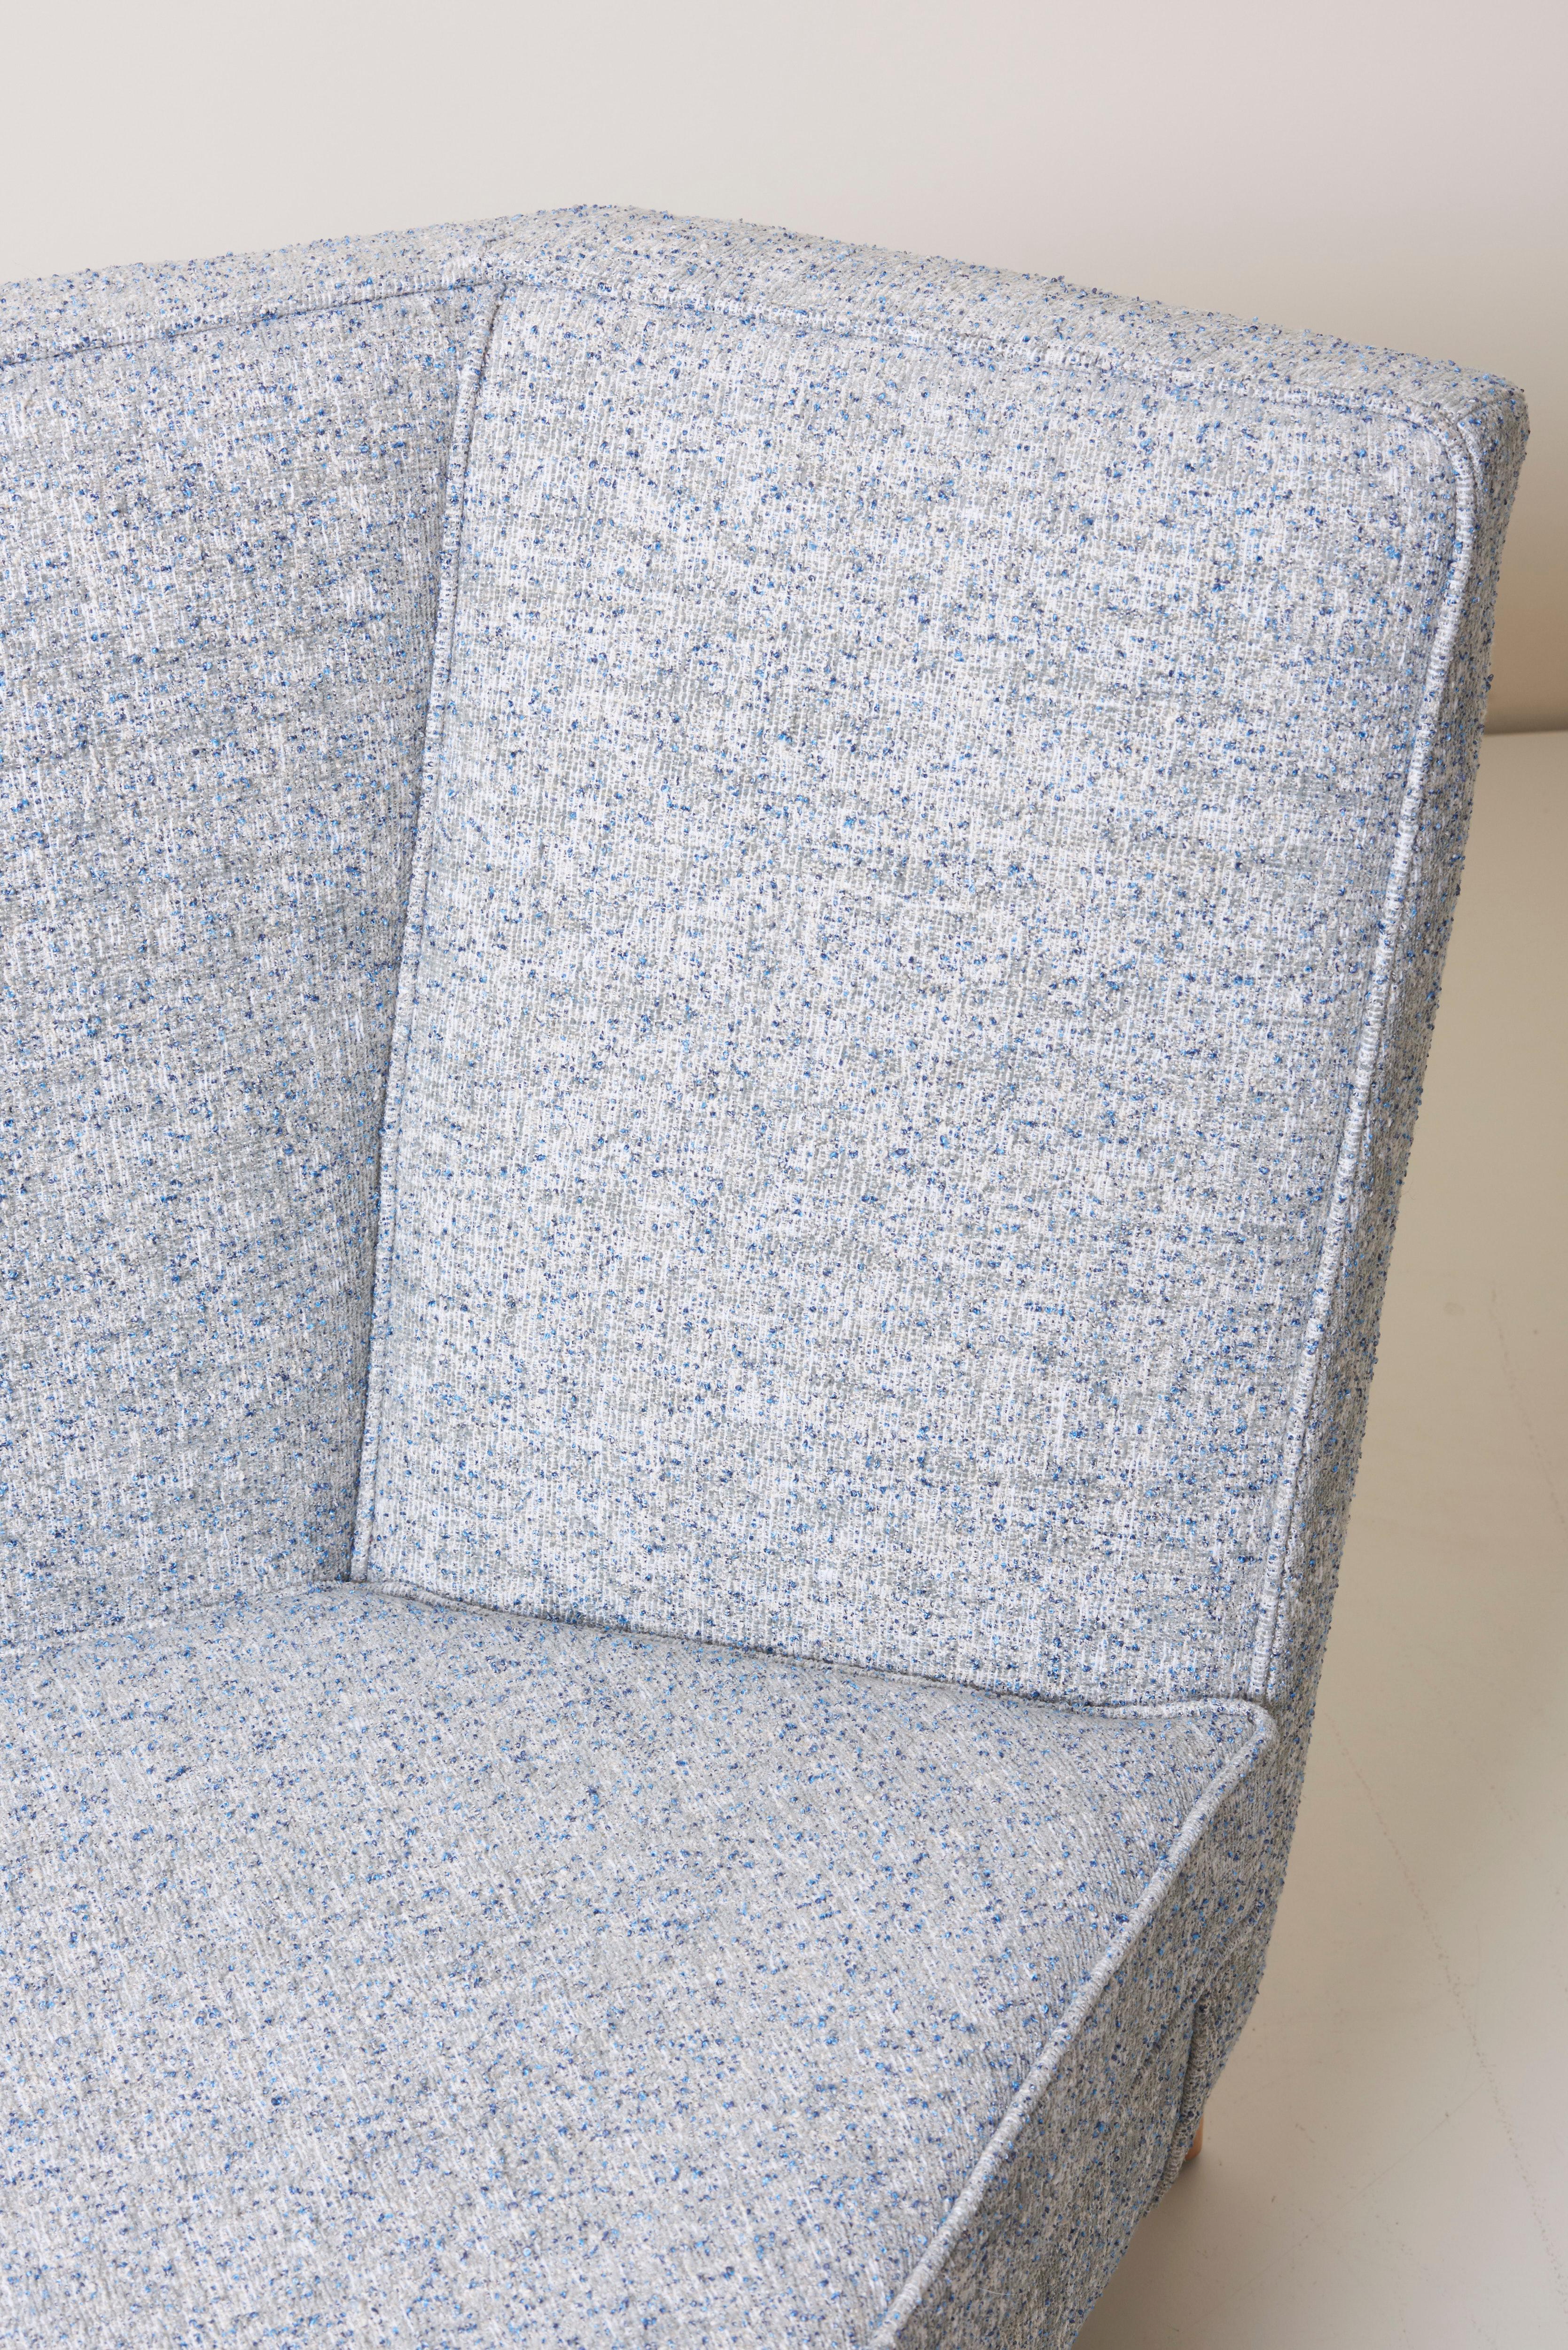 Paul McCobb Sectional Corner Sofa Custom Craft/ Planner Group Newly Upholstered For Sale 9